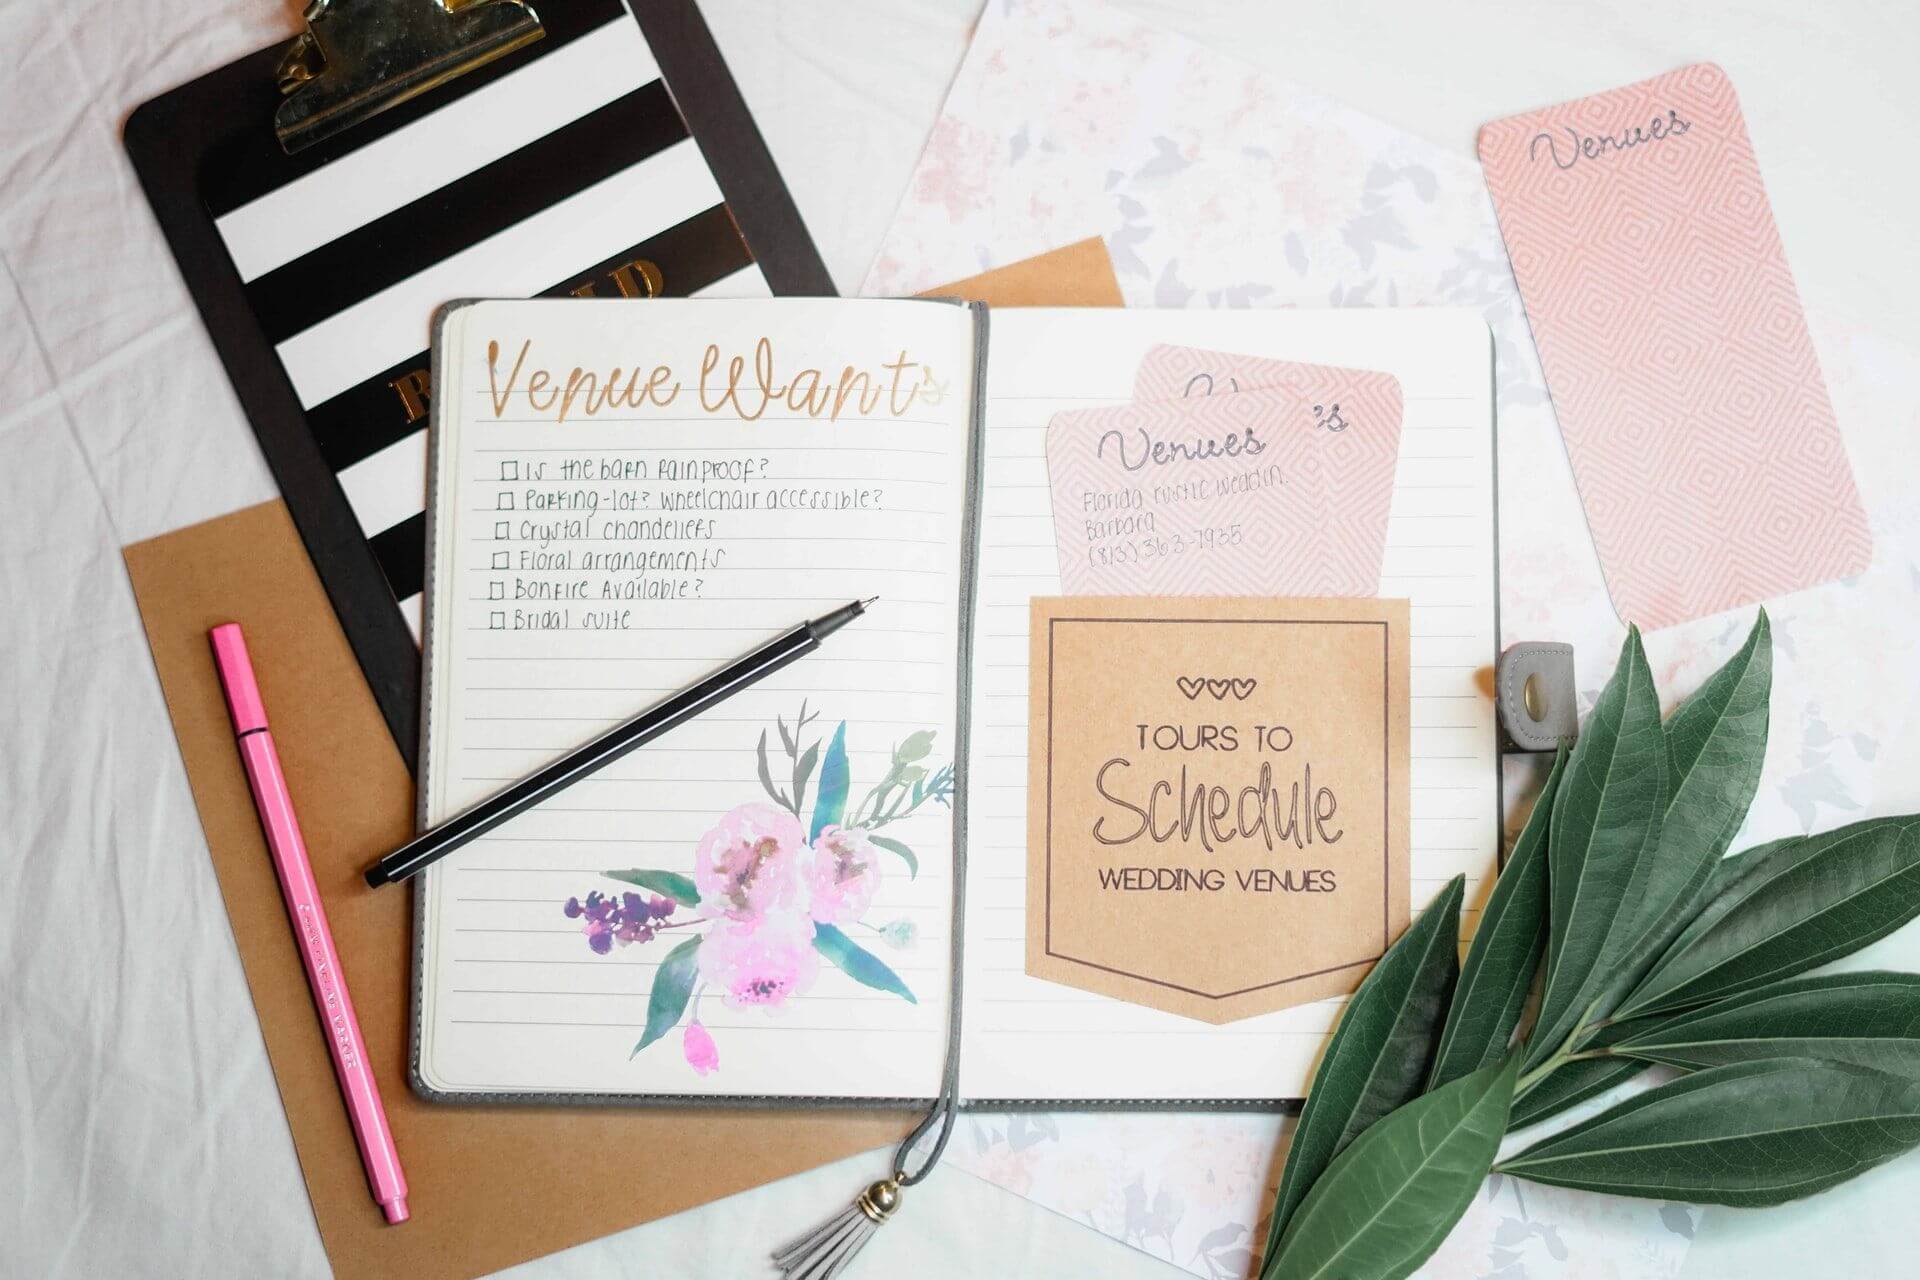 Printable Wedding Planner Kit for Organizing Your Dream Wedding